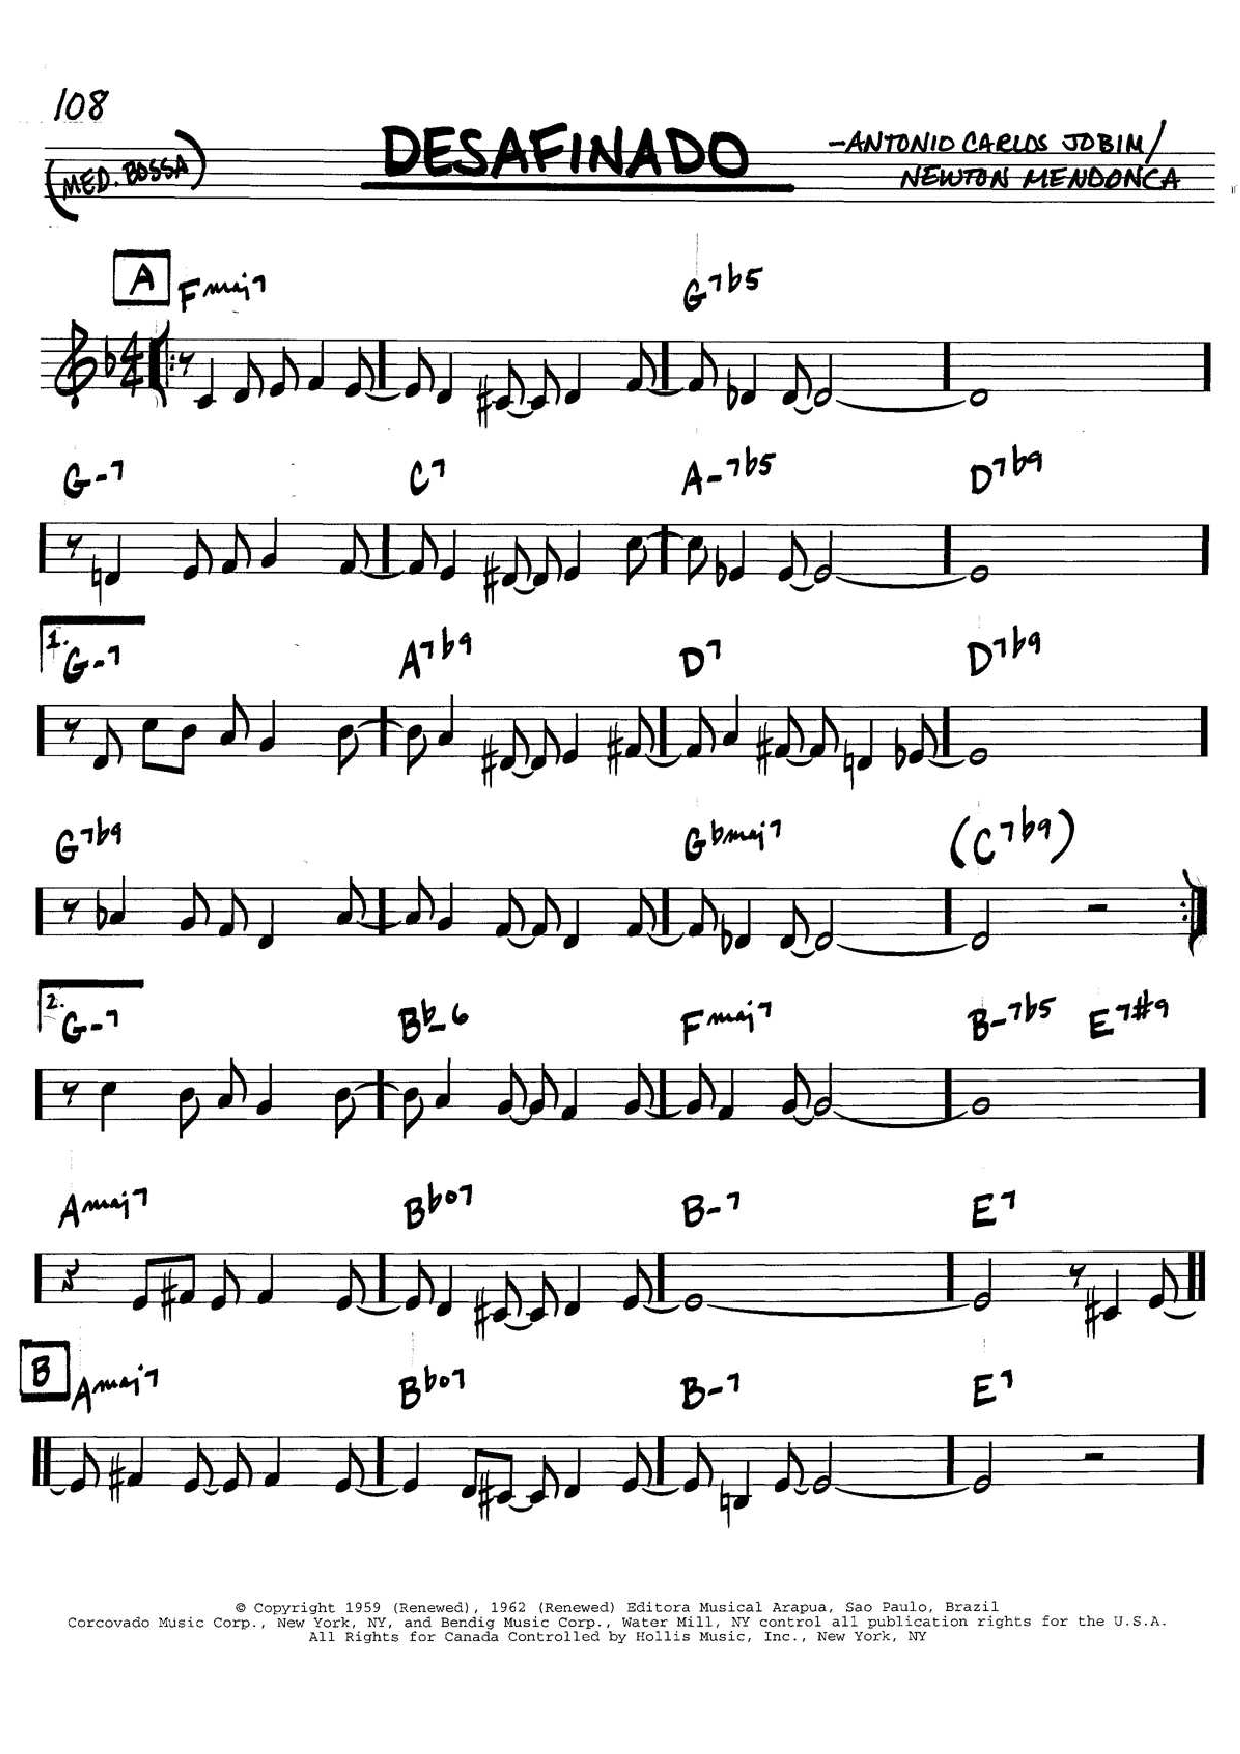 Antonio Carlos Jobim Desafinado Sheet Music Notes & Chords for Real Book - Melody & Chords - Bb Instruments - Download or Print PDF